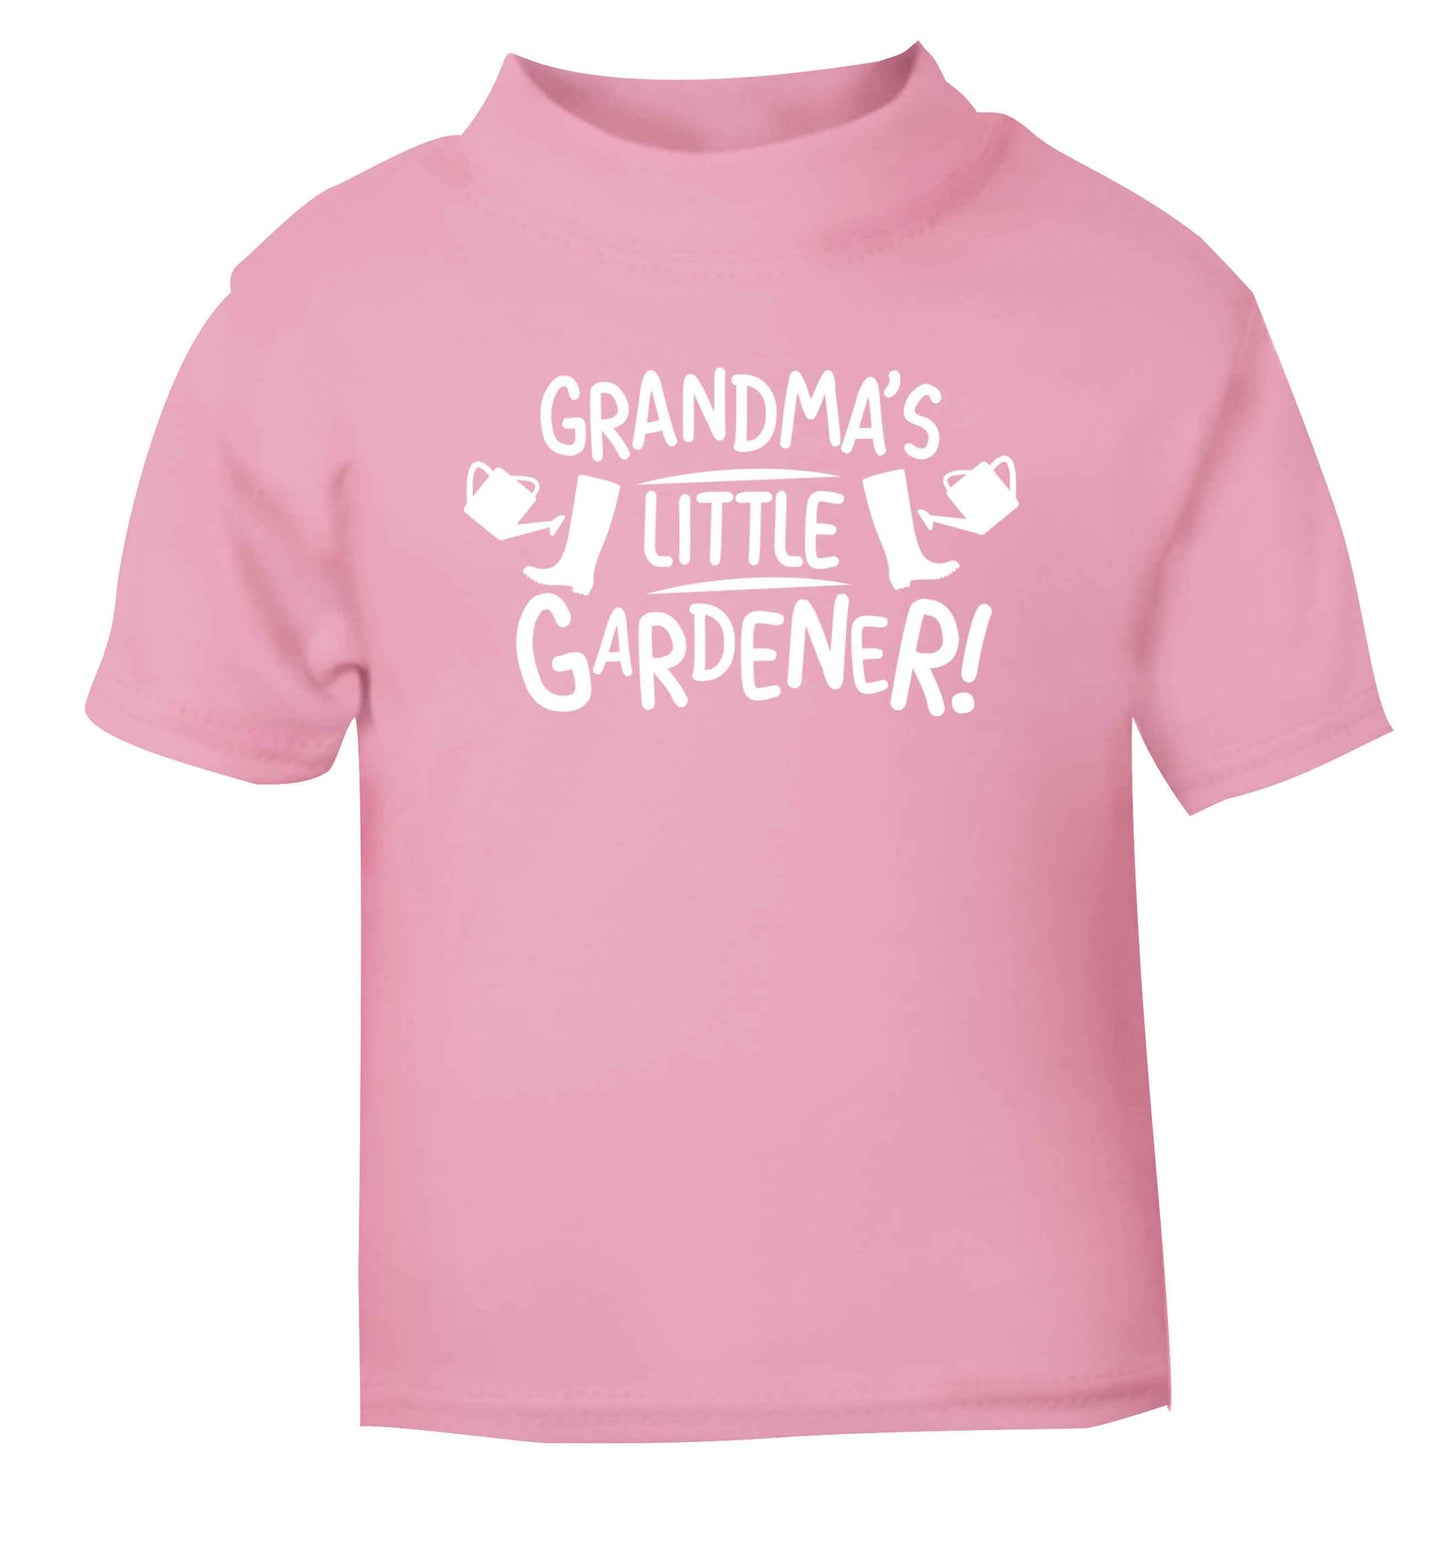 Grandma's little gardener light pink Baby Toddler Tshirt 2 Years